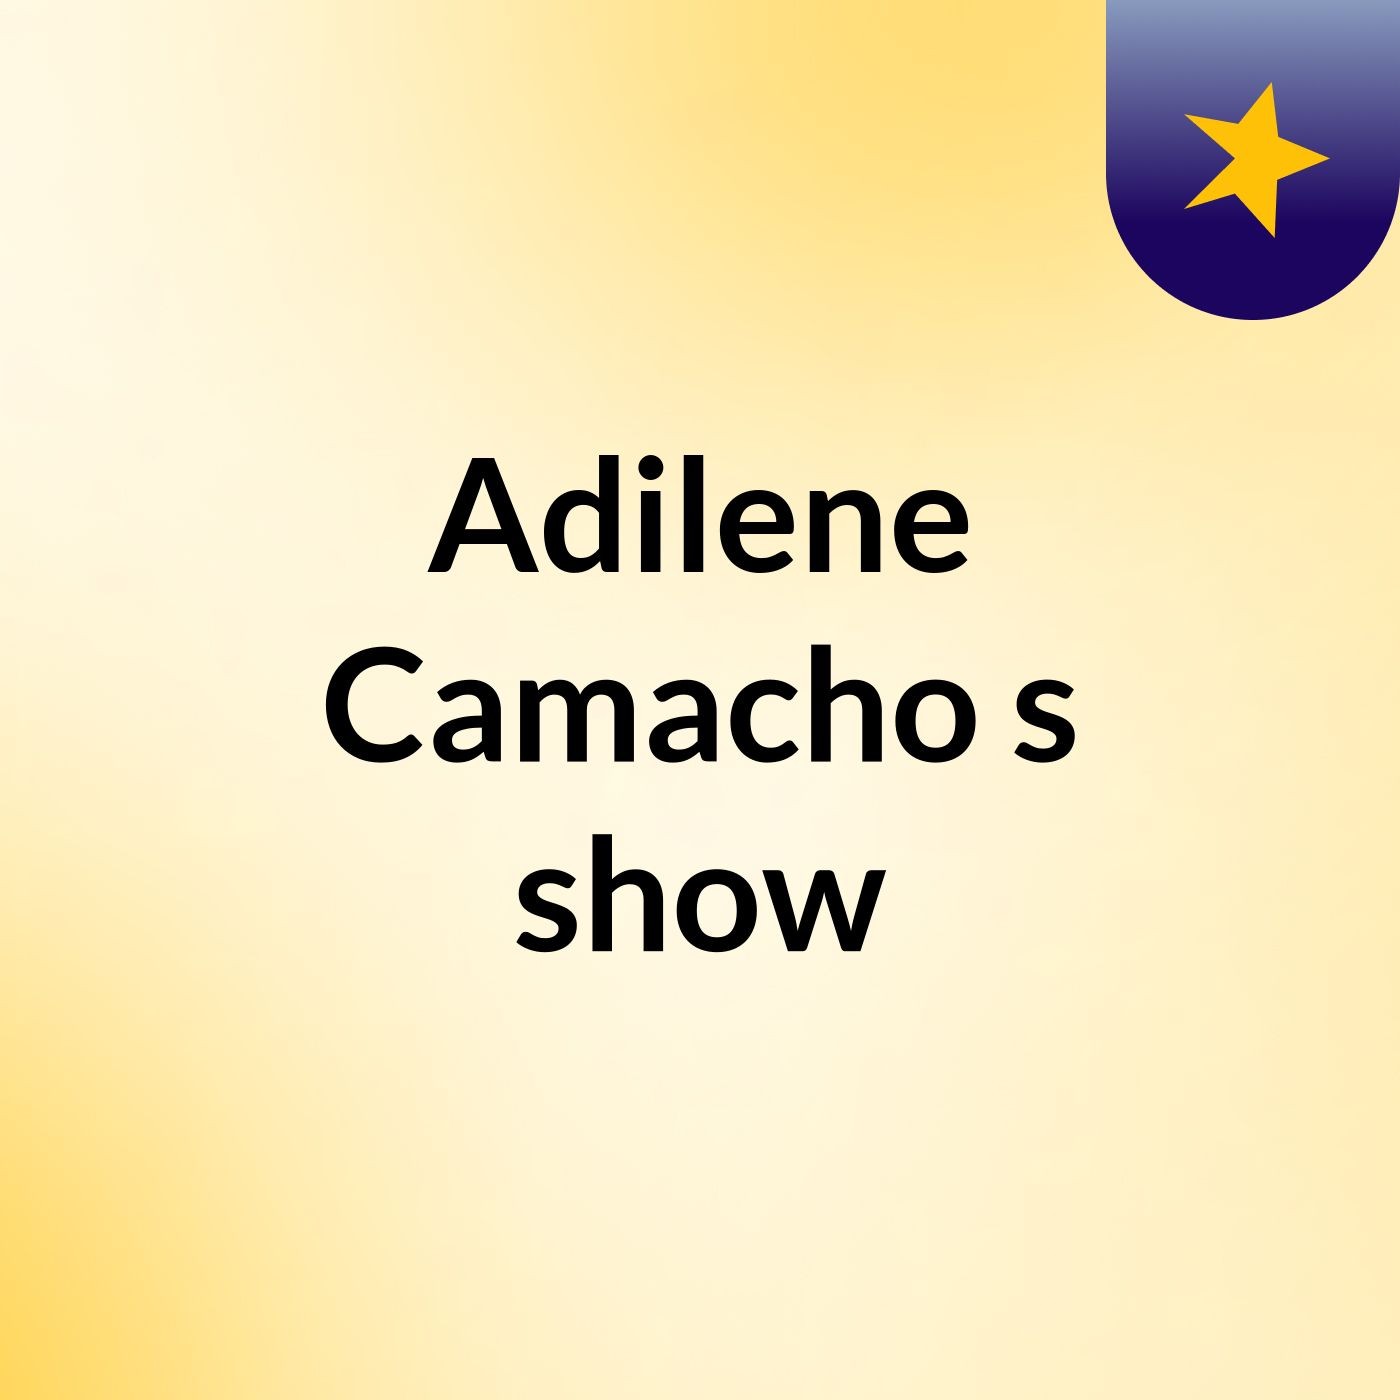 Adilene Camacho's show